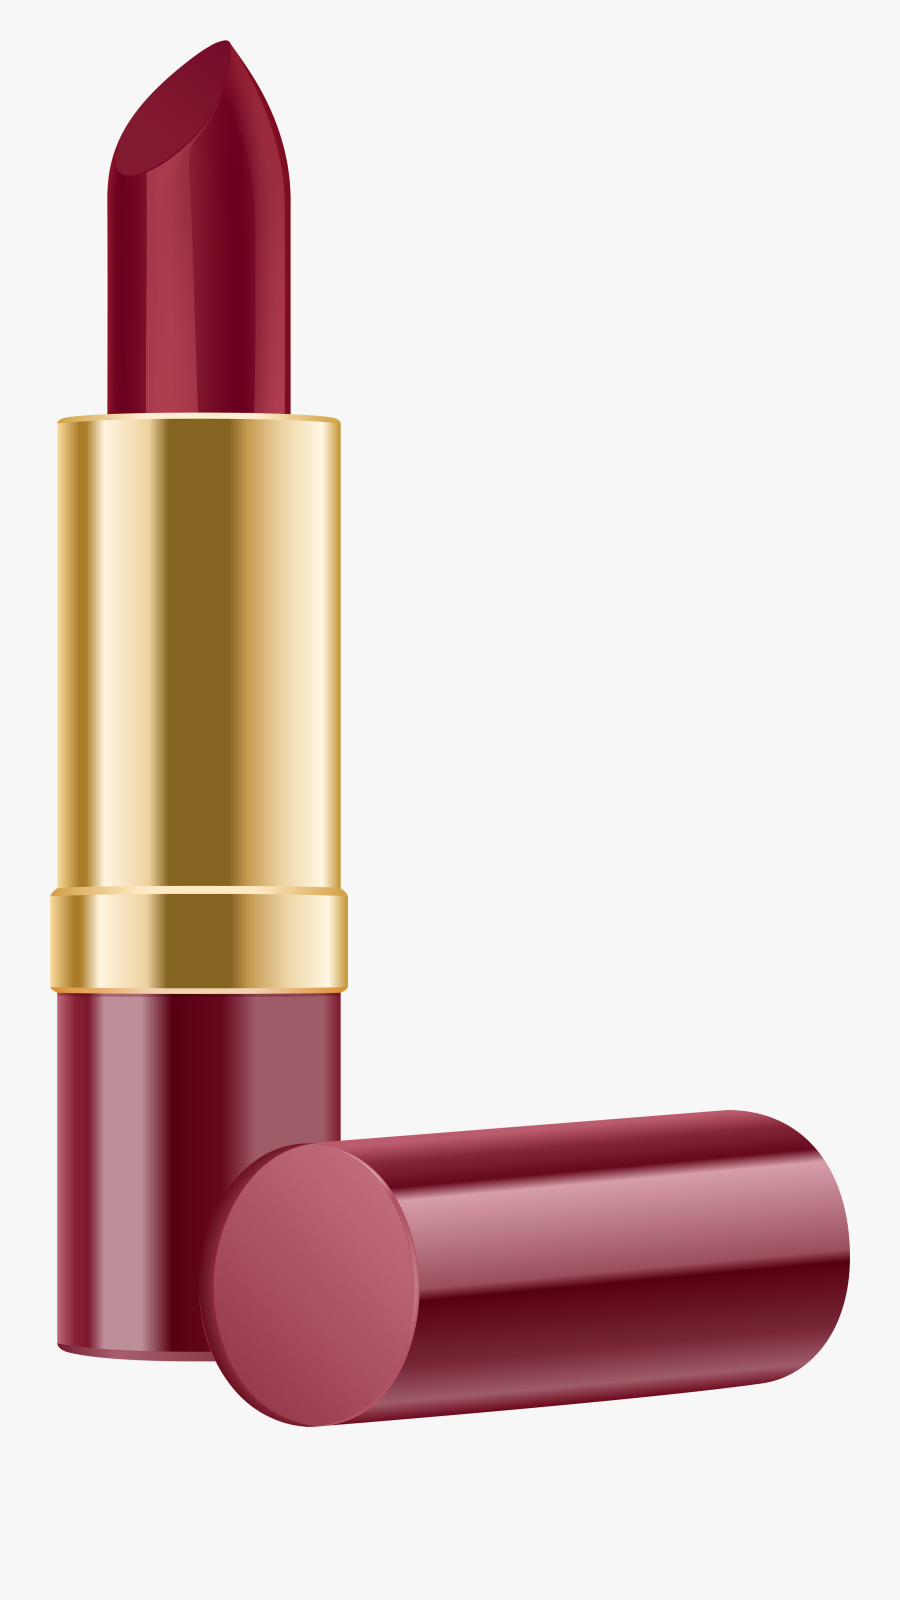 Transparent Background Red Lipstick Clipart, Transparent Clipart